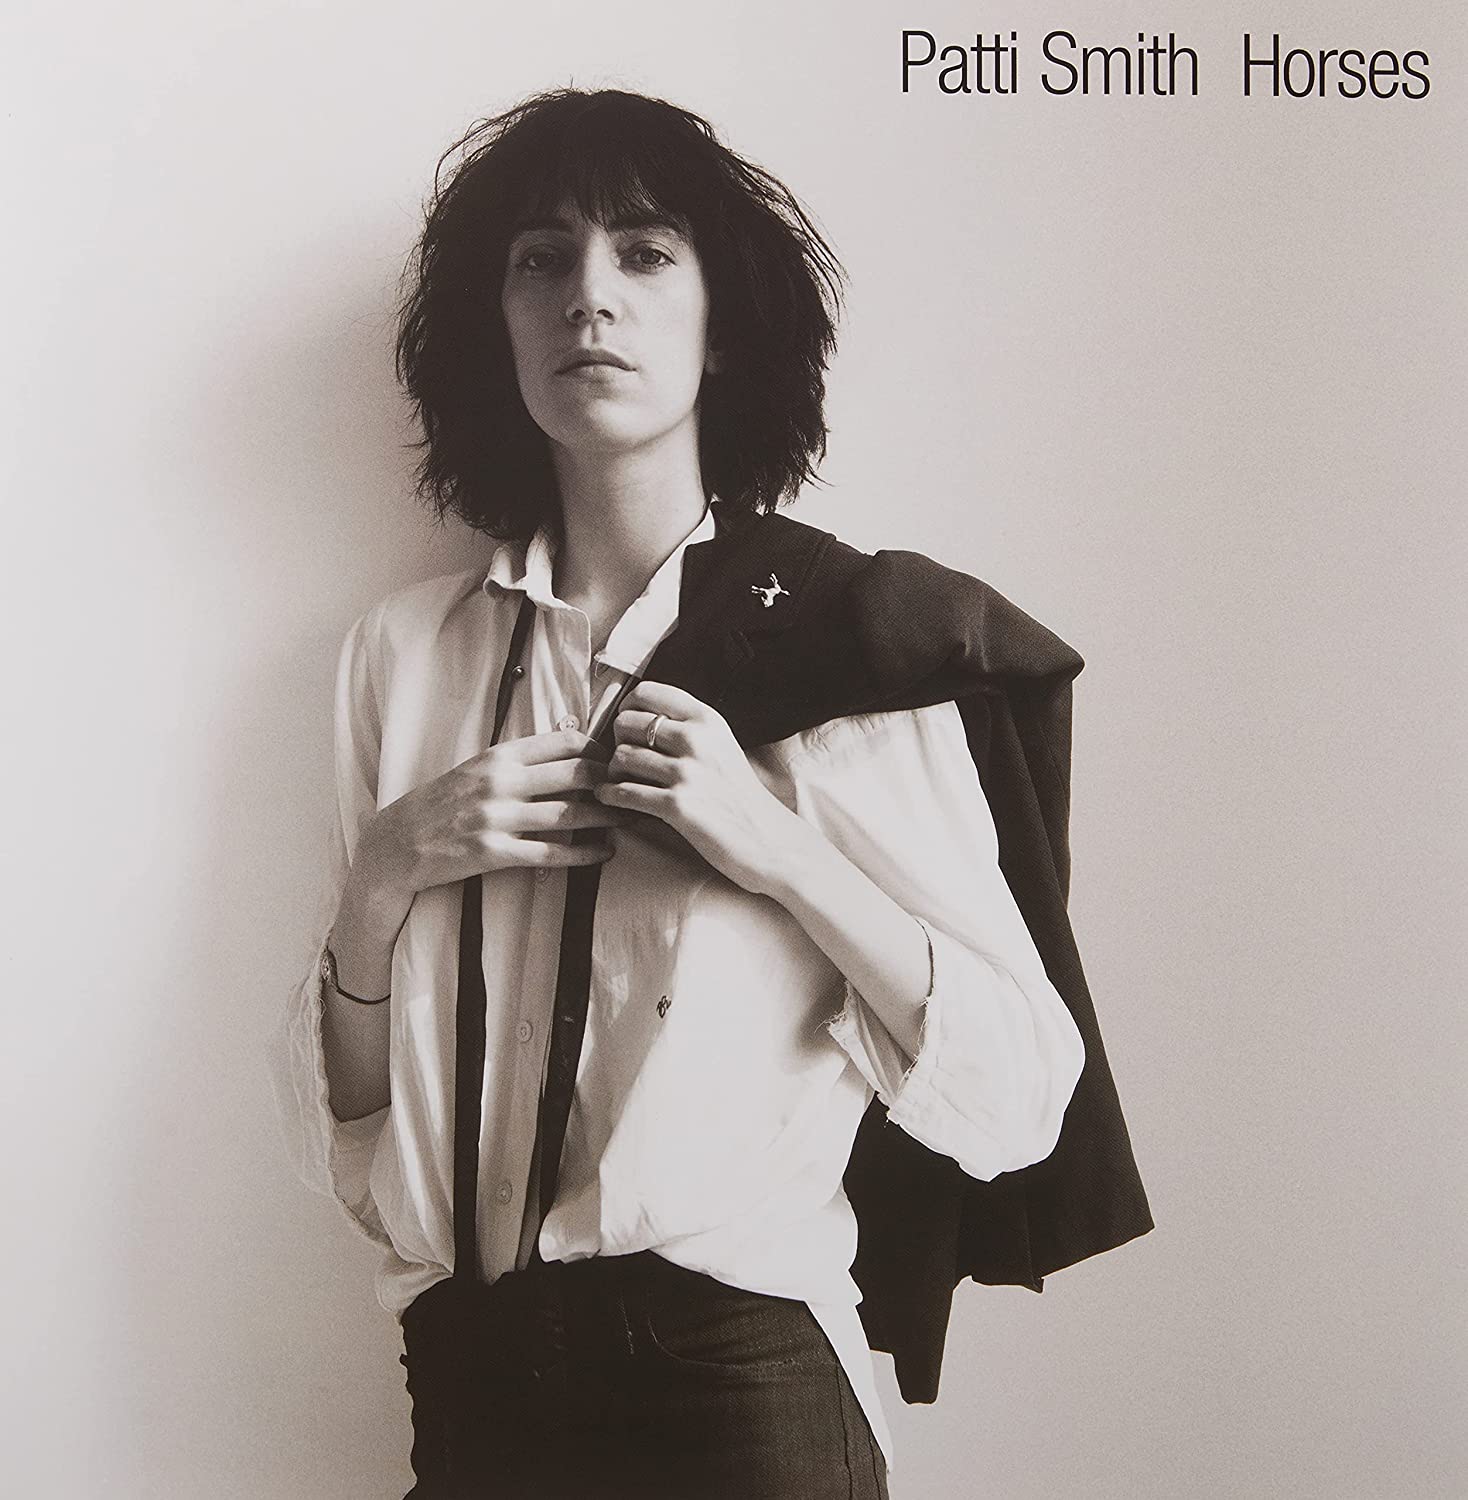 Patti Smith "Horses" LP